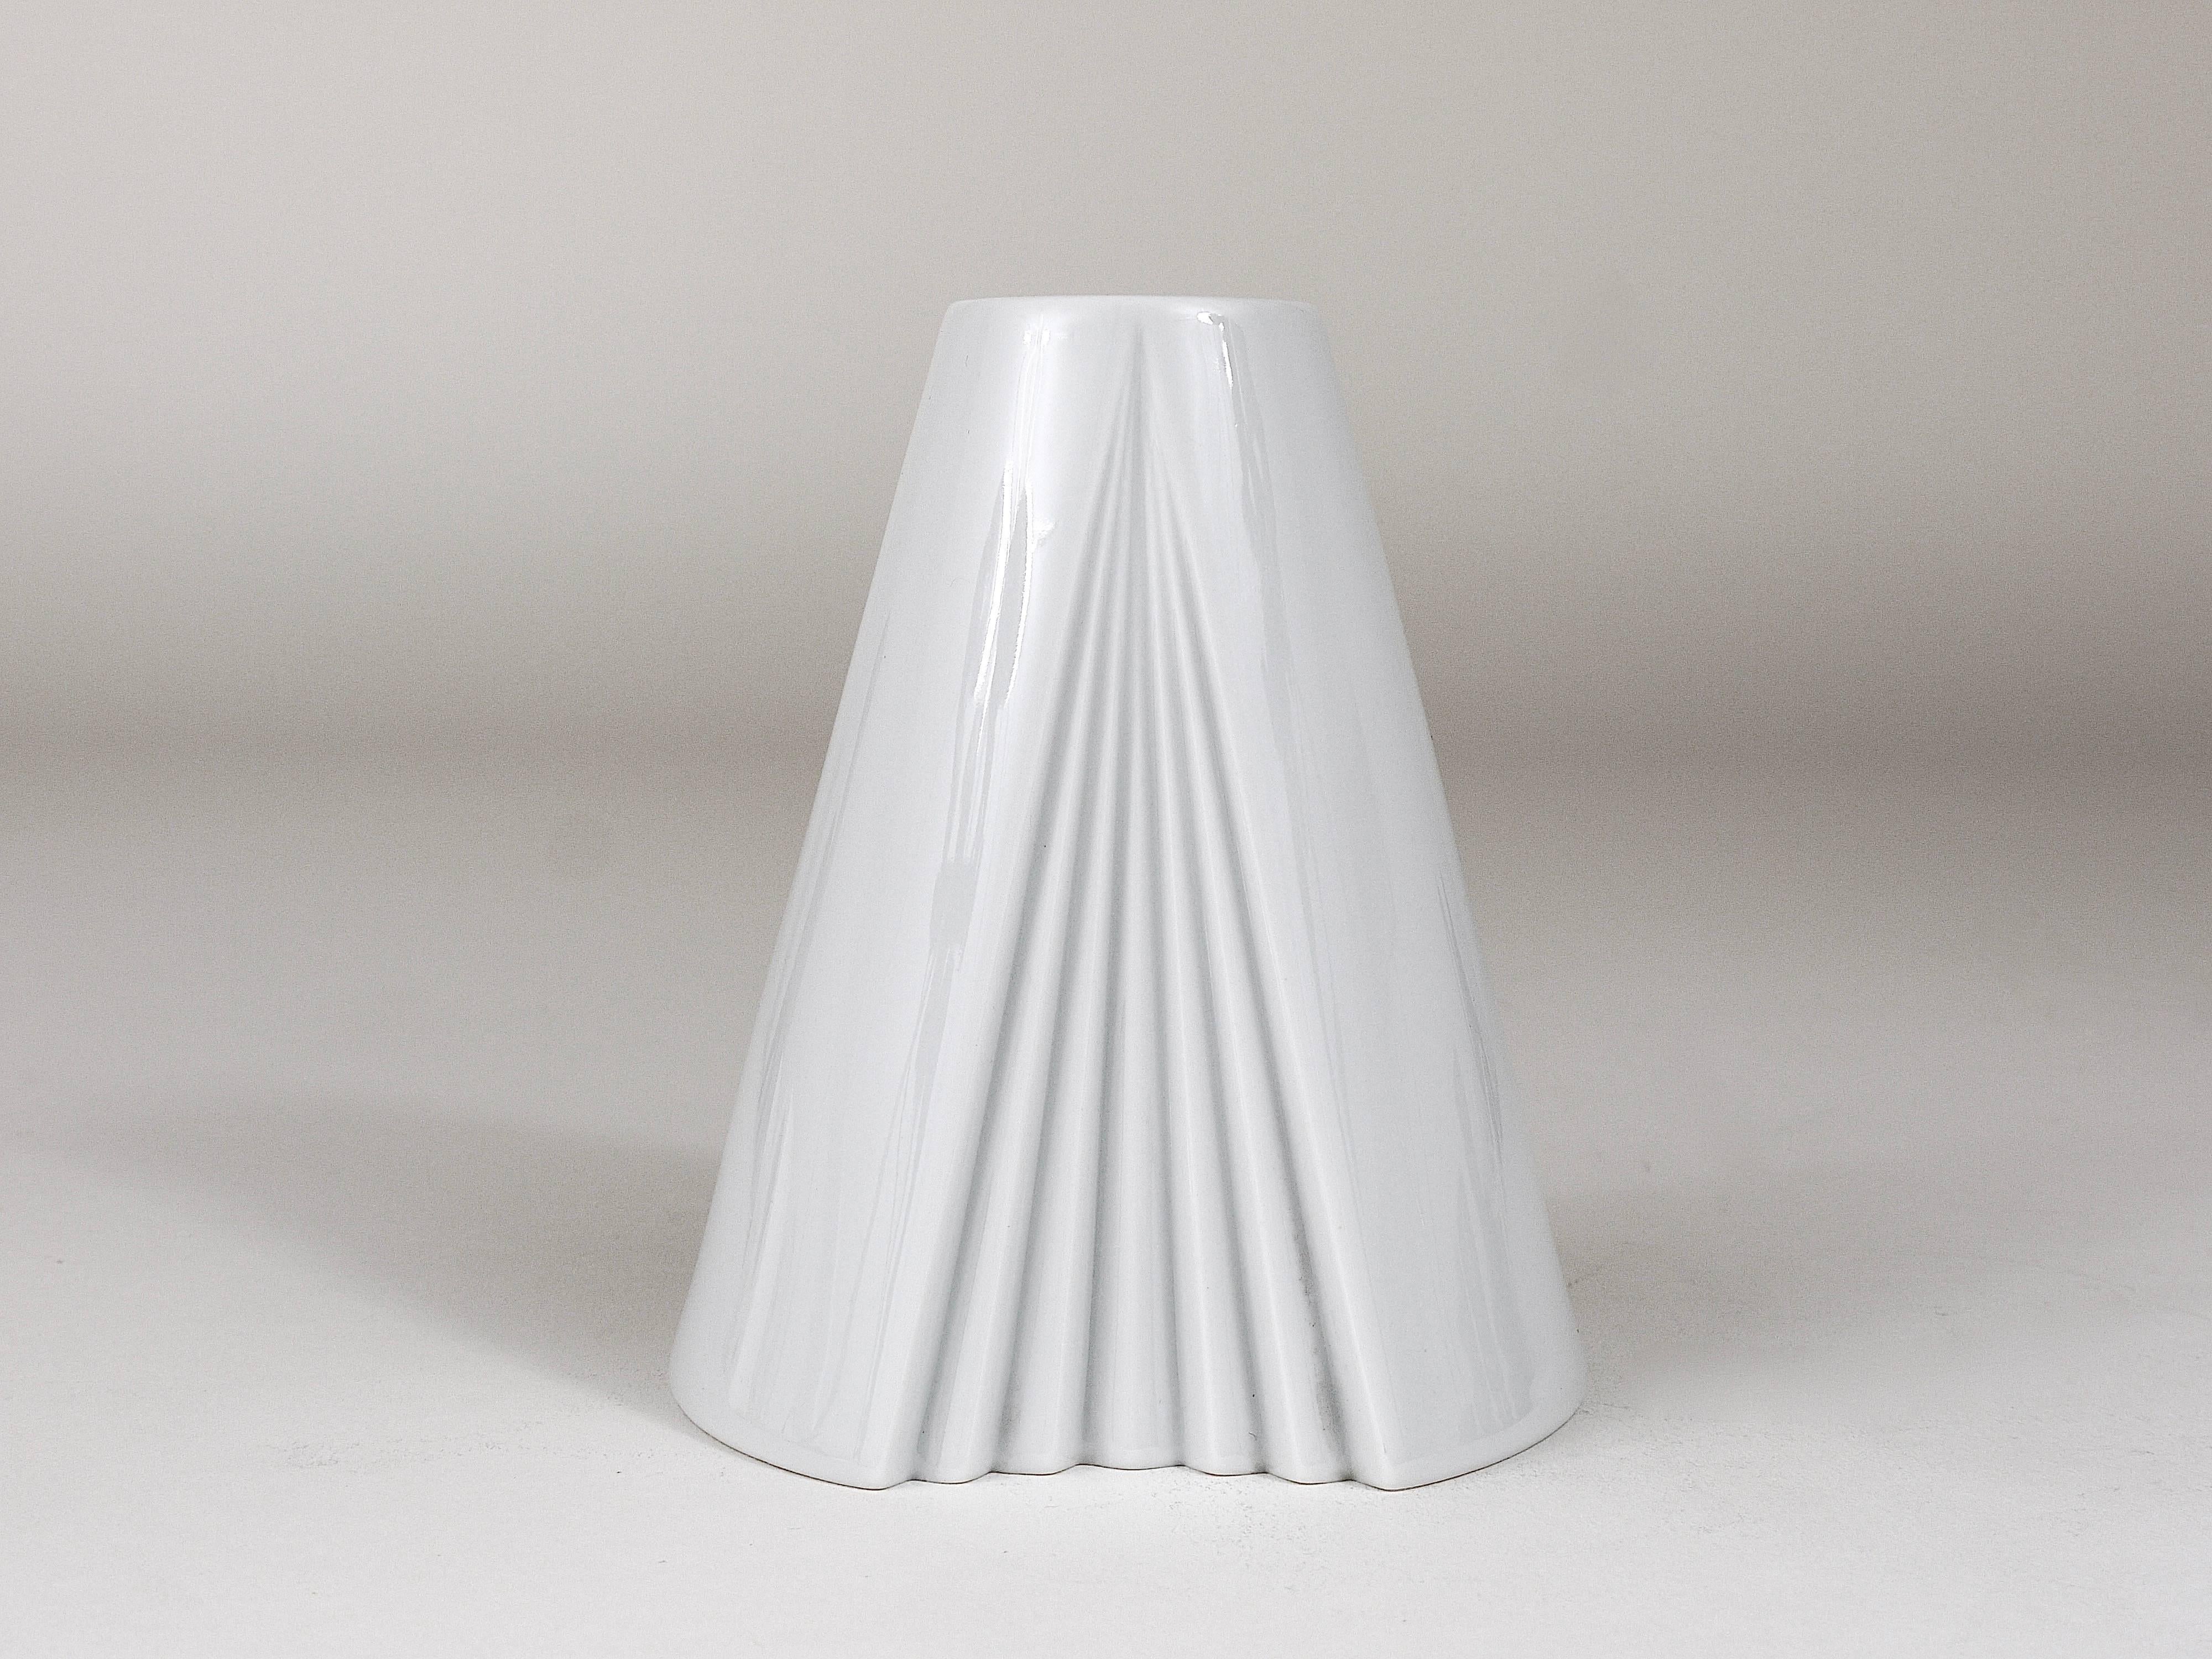 White Geometric Op Art Porcelain Vase, Ambrogio Pozzi, Rosenthal, Germany, 1980s For Sale 1